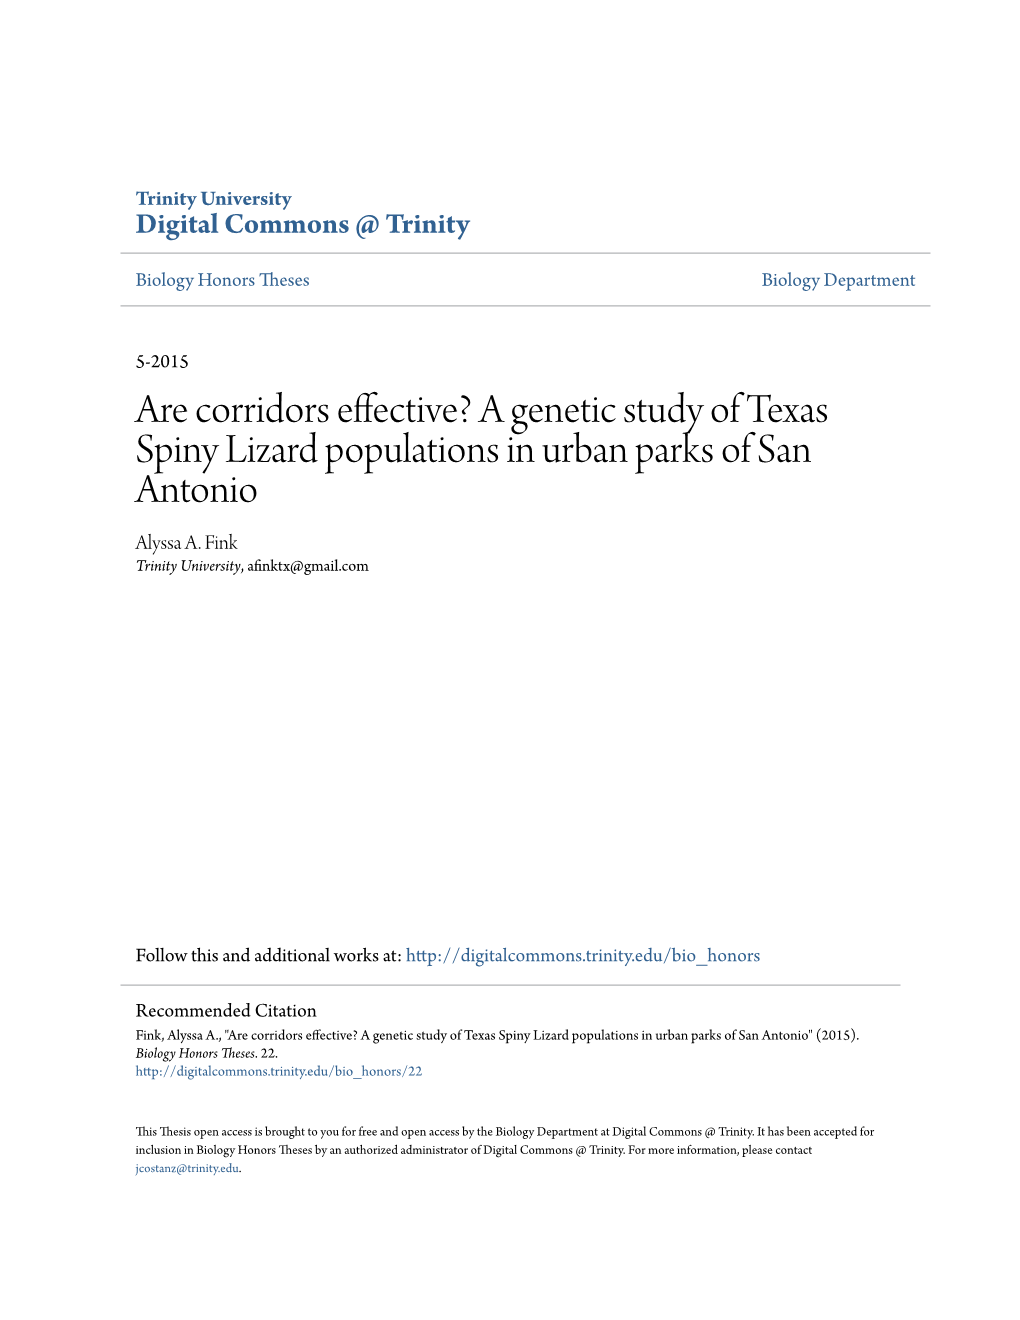 A Genetic Study of Texas Spiny Lizard Populations in Urban Parks of San Antonio Alyssa A